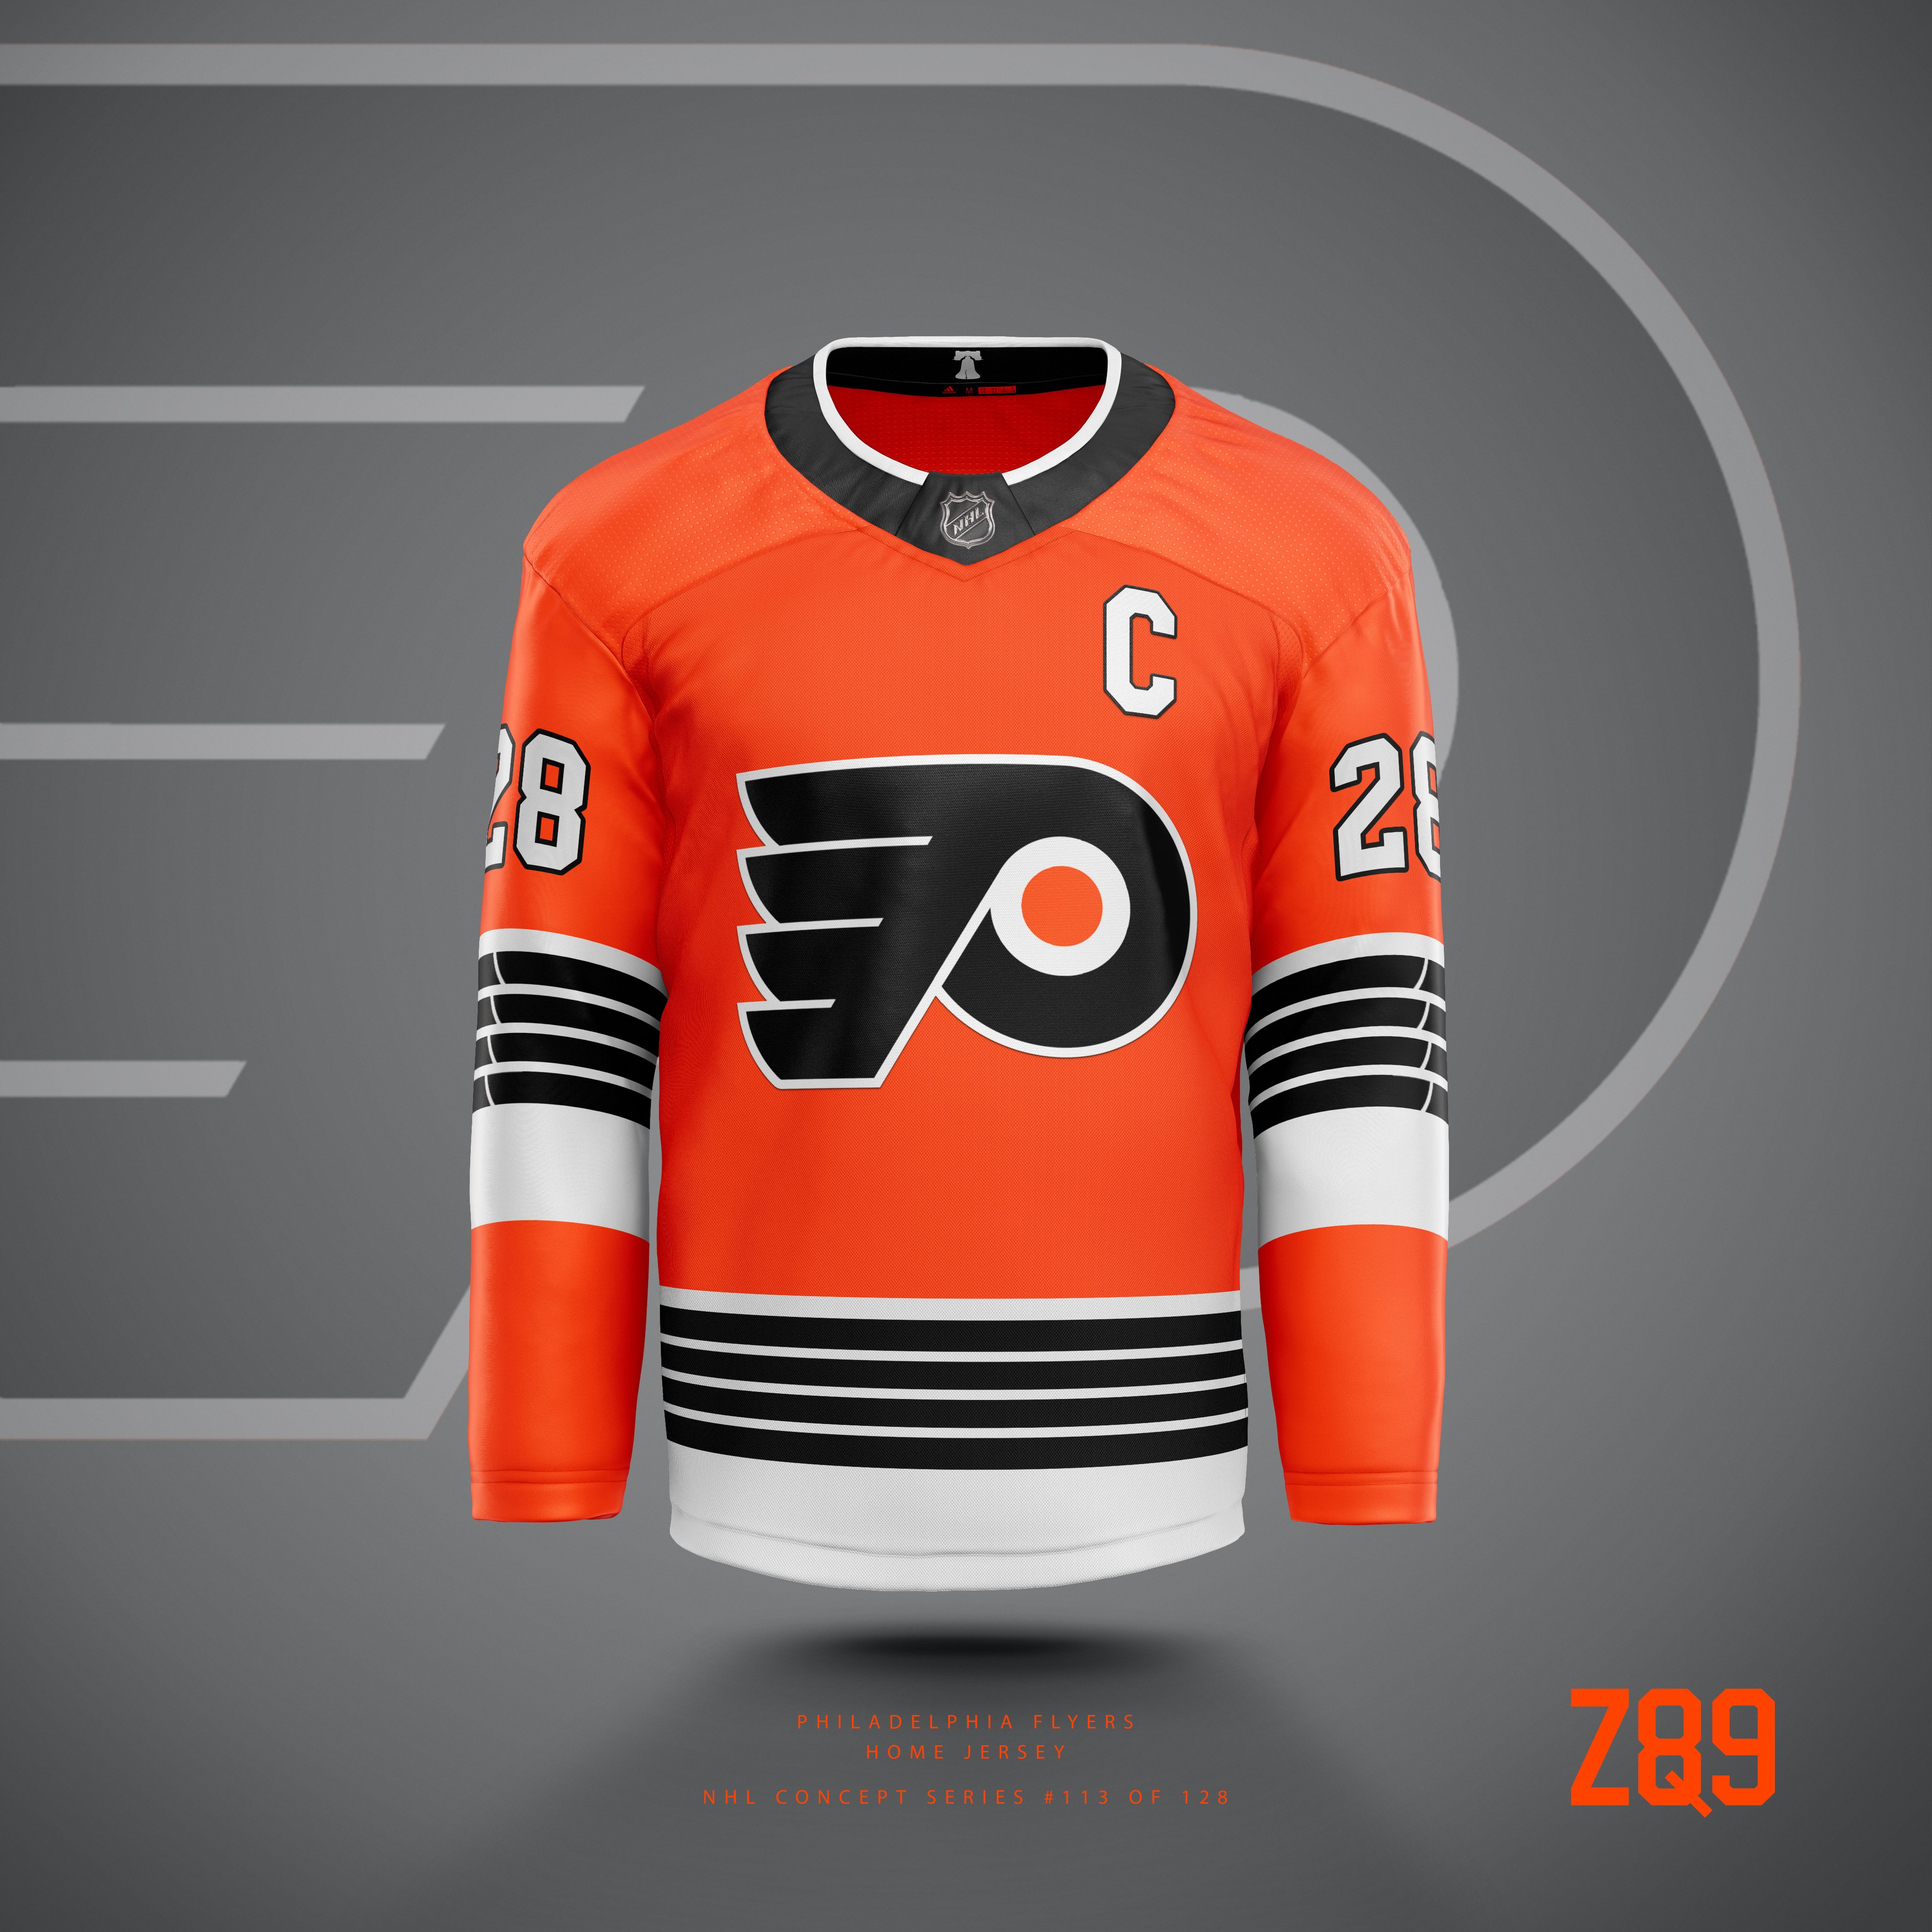 saltshaker91 posted to Instagram: Philadelphia Flyers hockey jersey concept  design made by @cd24_design…